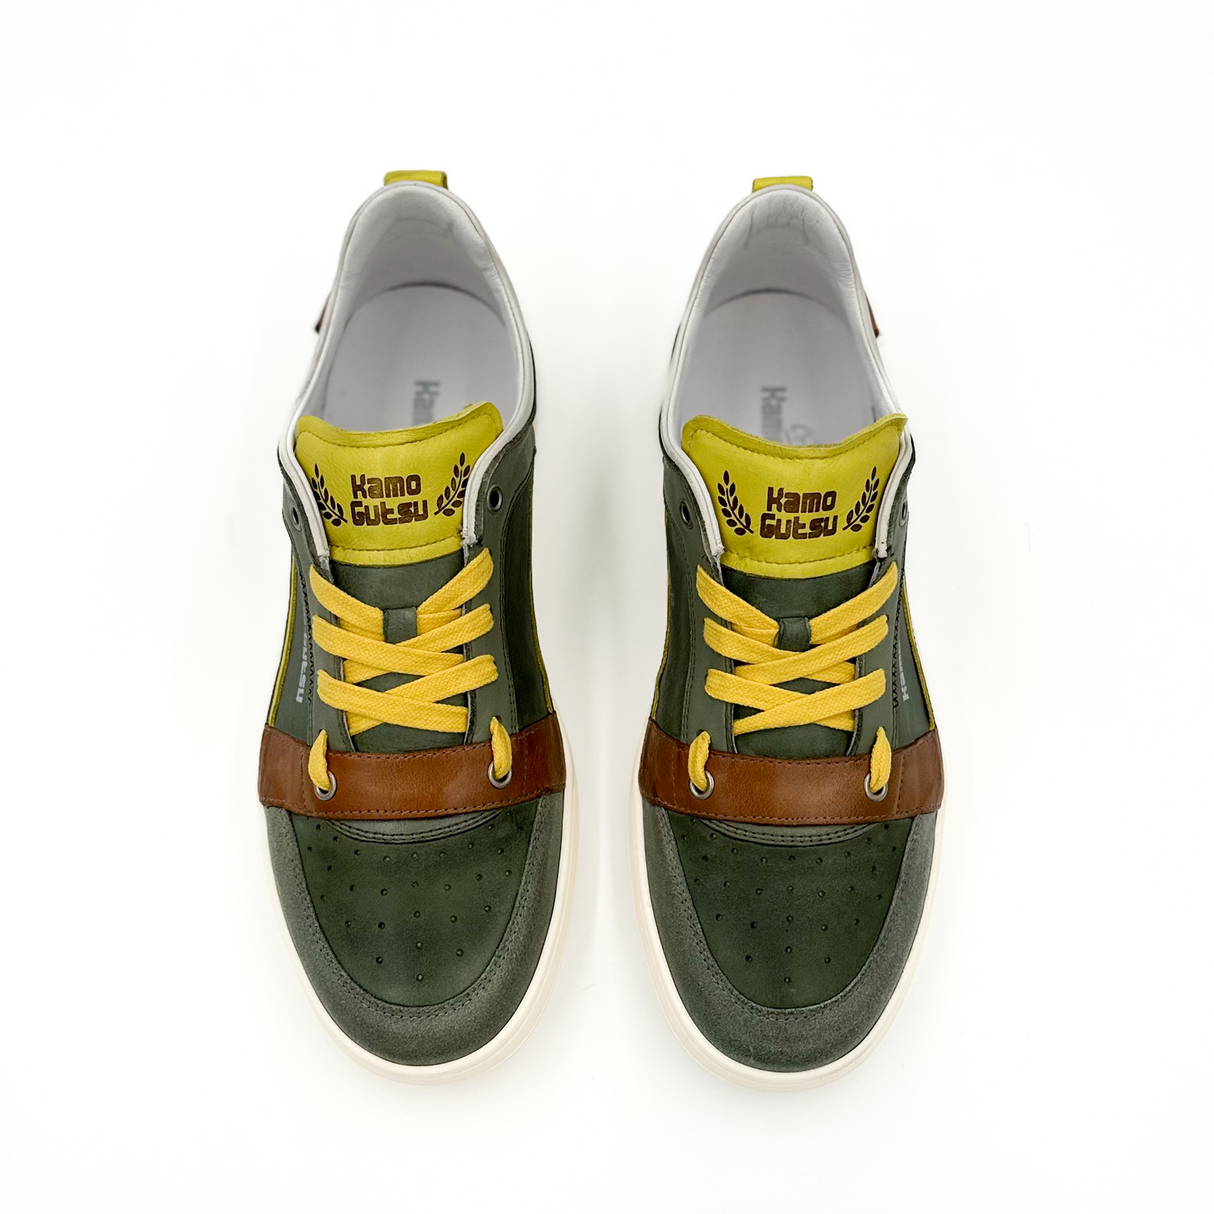 Kamo-Gutsu CAMPO 058 Sneaker (Men) - Lavato/Edera Athletic - Casual - Lace Up - The Heel Shoe Fitters